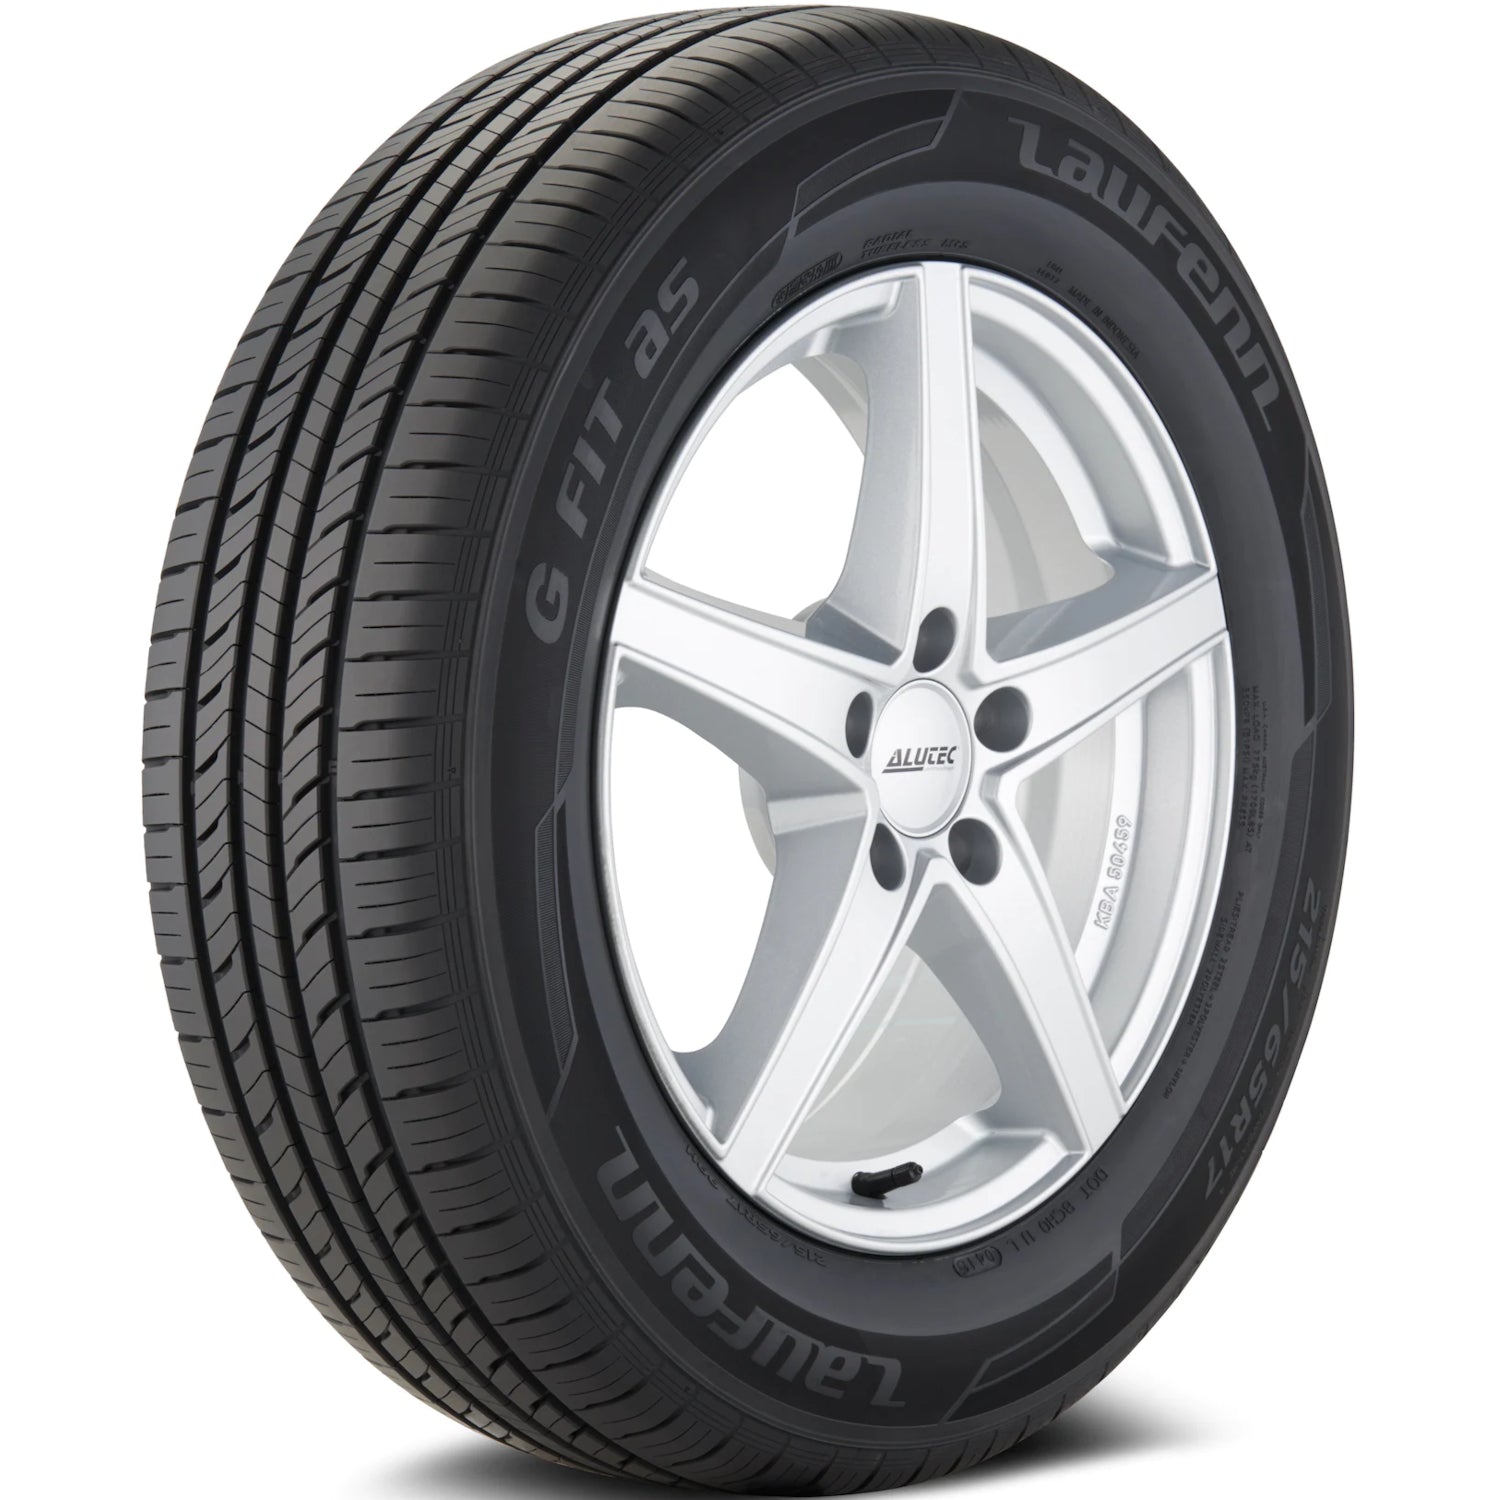 LAUFENN G FIT AS 185/60R15 (23.7X7.3R 15) Tires